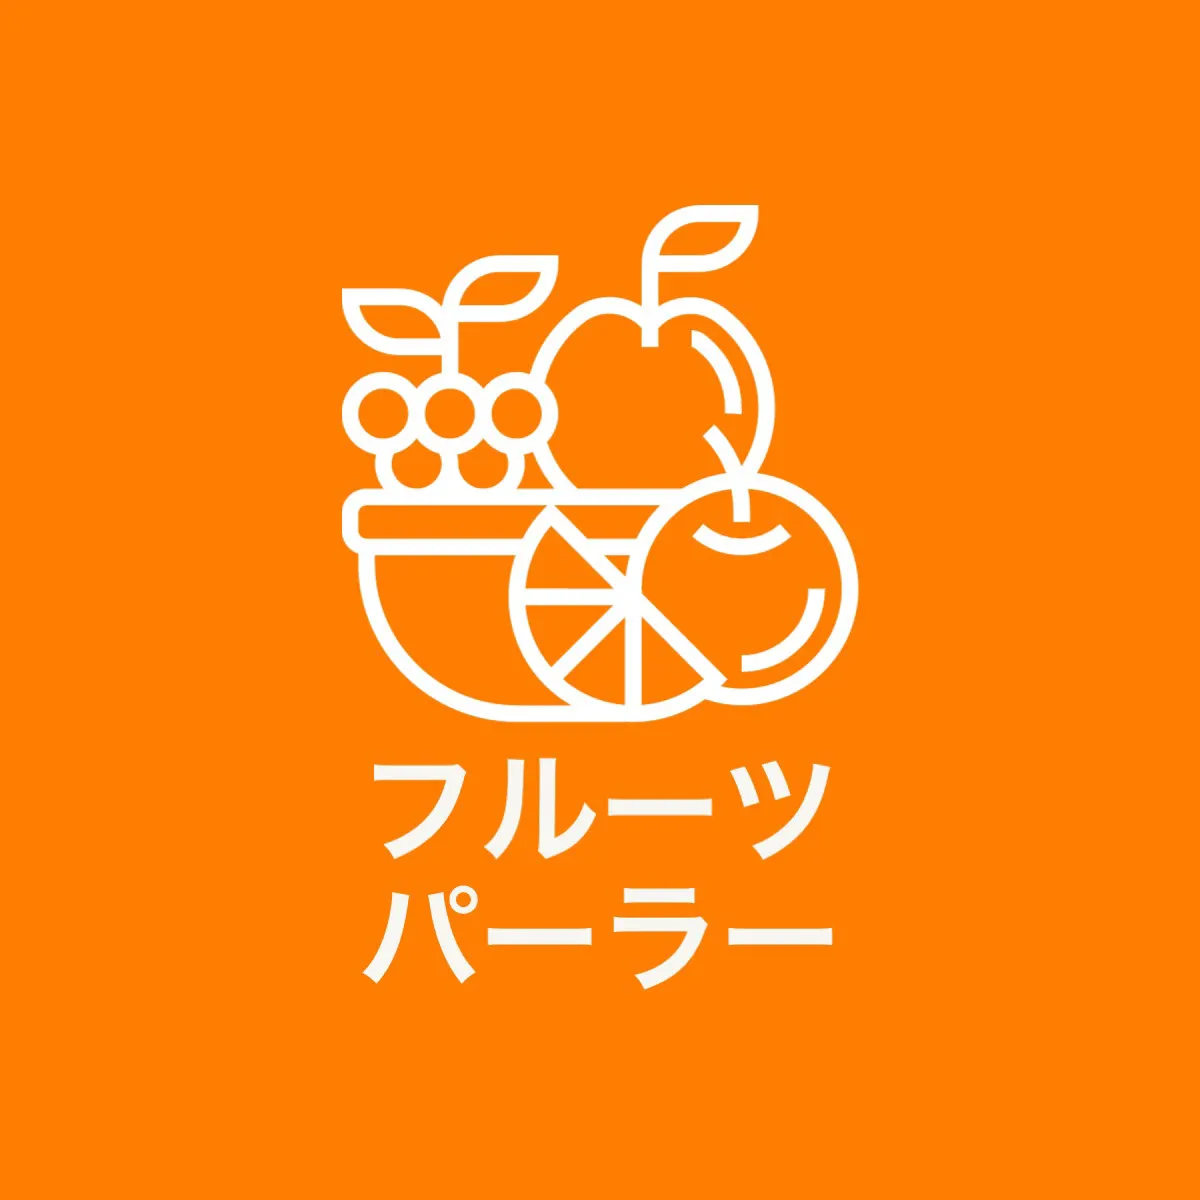 Orange fruits parlor logo